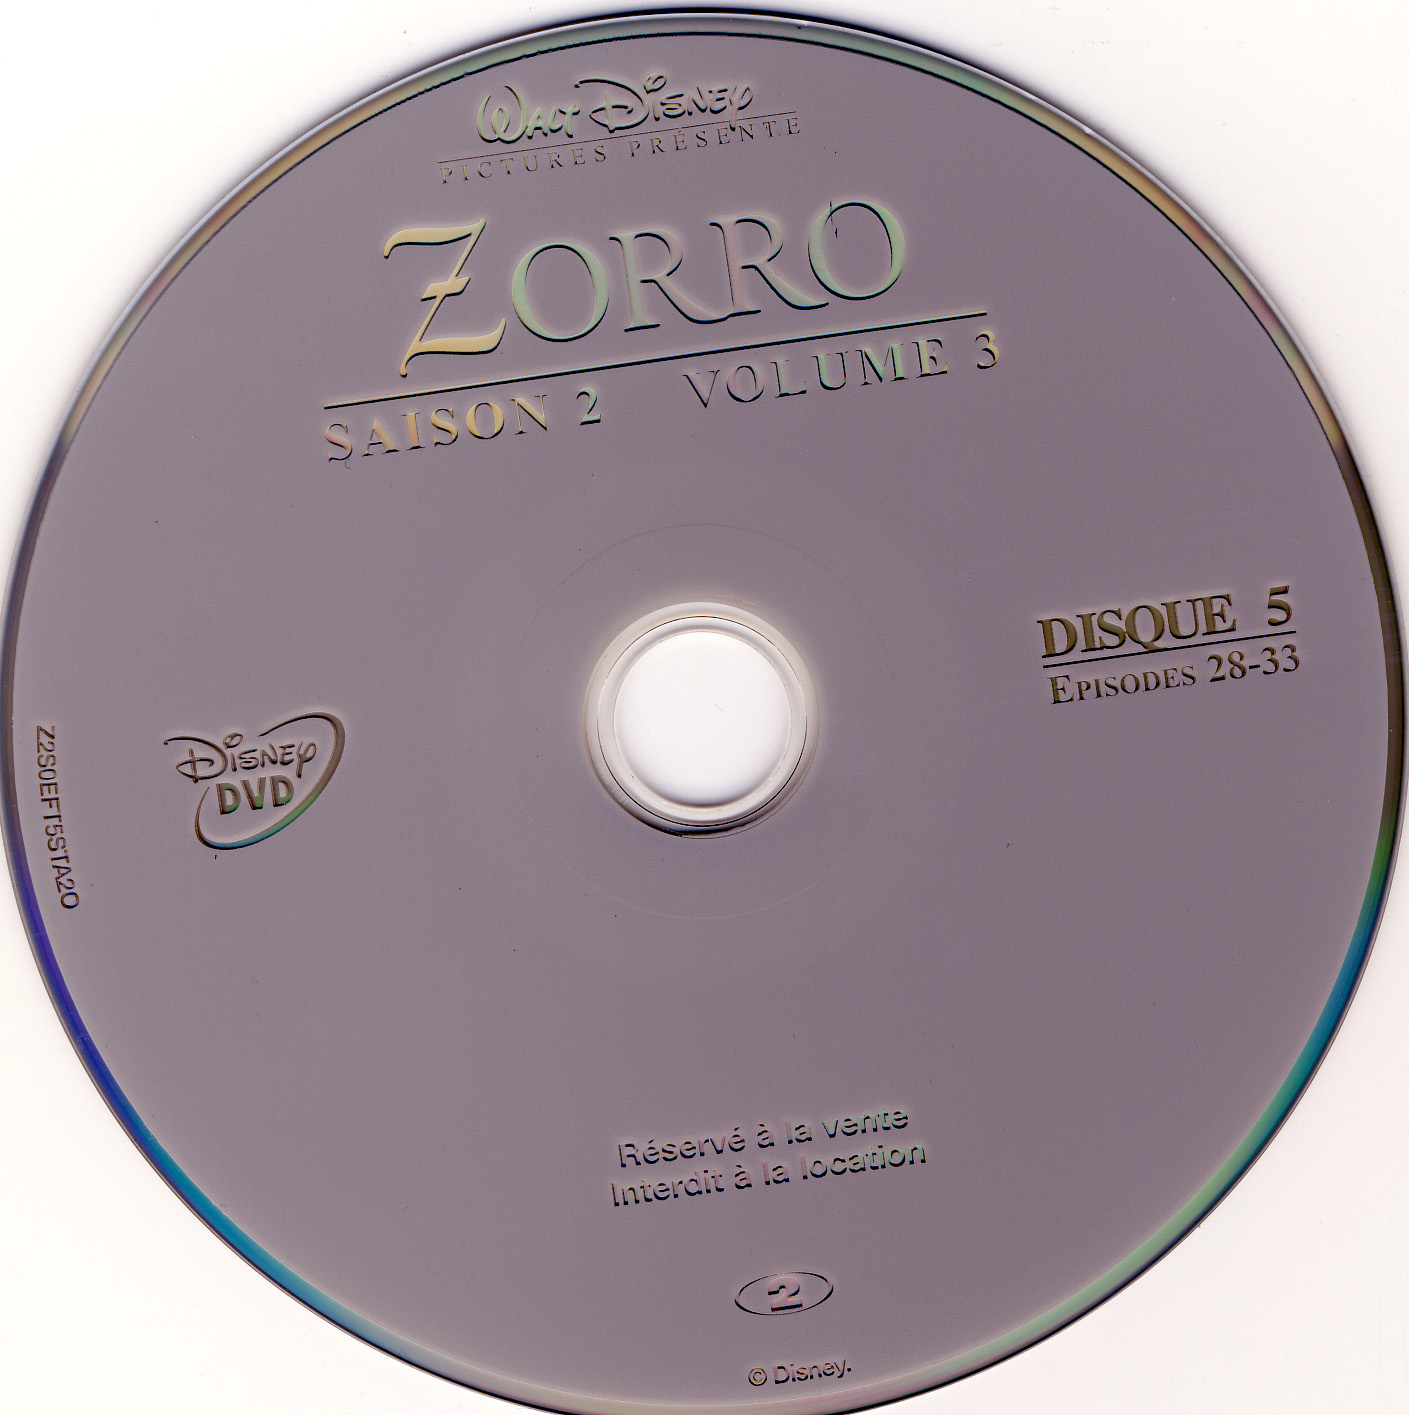 Zorro Saison 2 vol 3 DISC 5